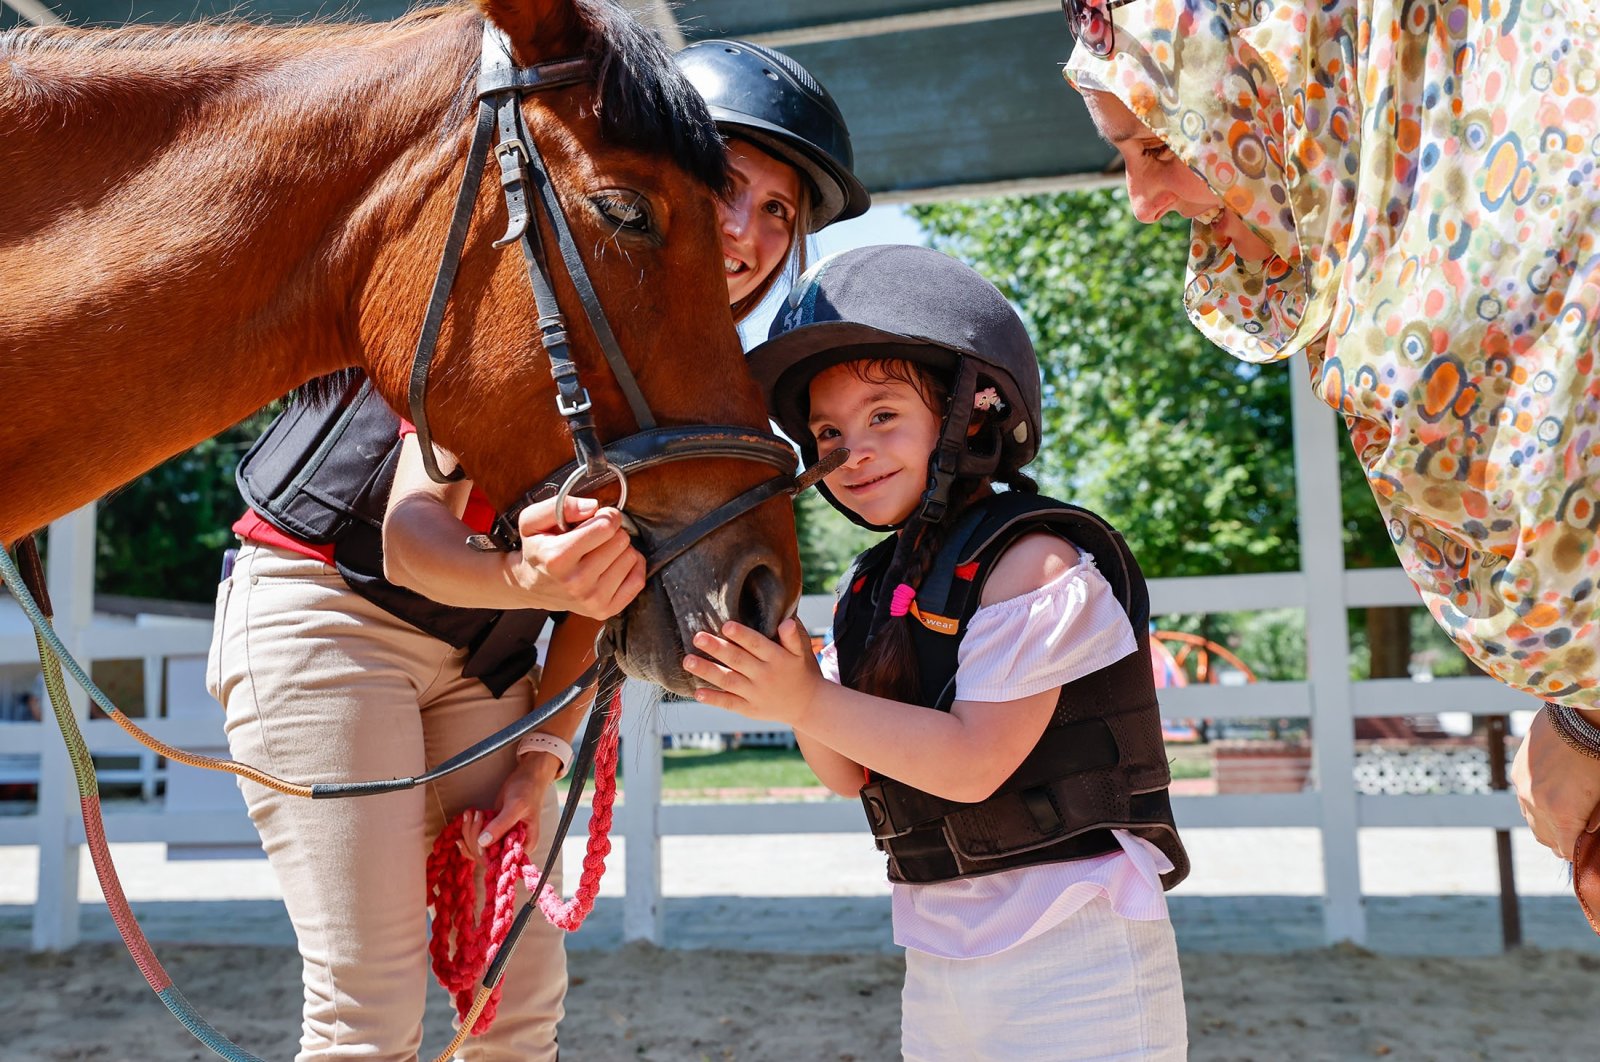 Pusat terapi Turki menawarkan penyembuhan anak-anak cacat melalui kuda